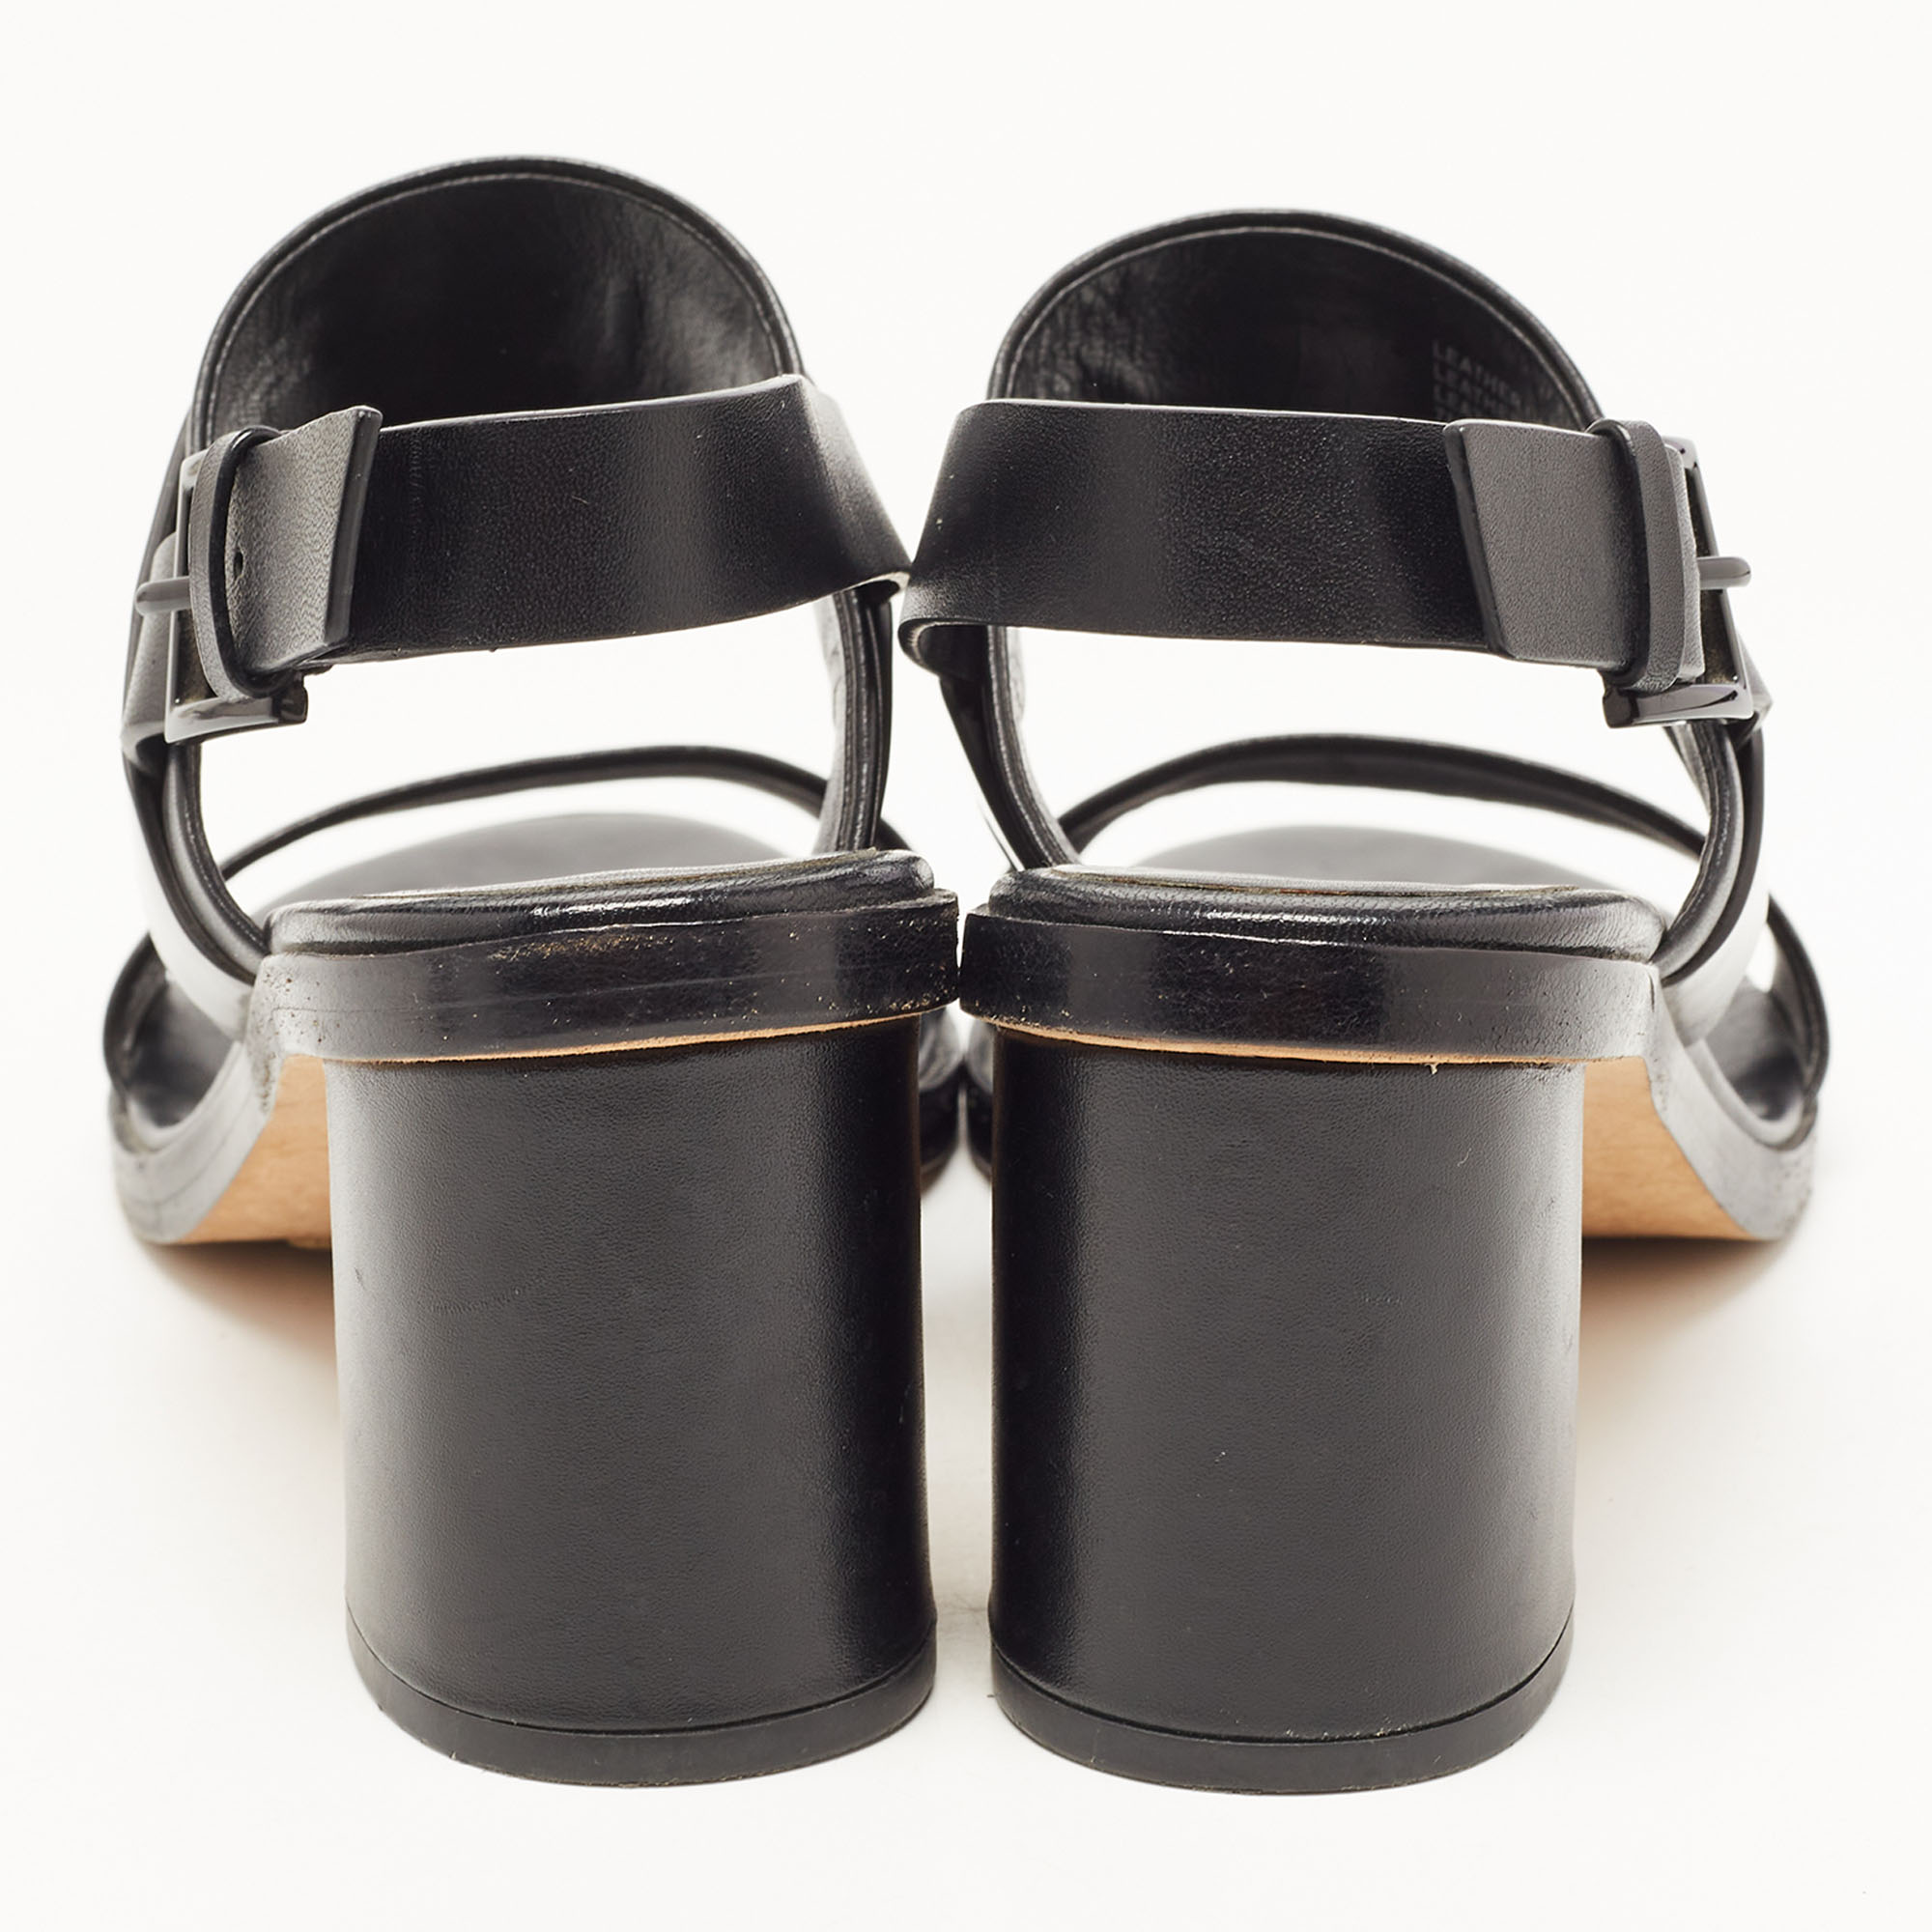 Tory Burch Black Leather Gigi Block Heel Slingback Sandals Size 37